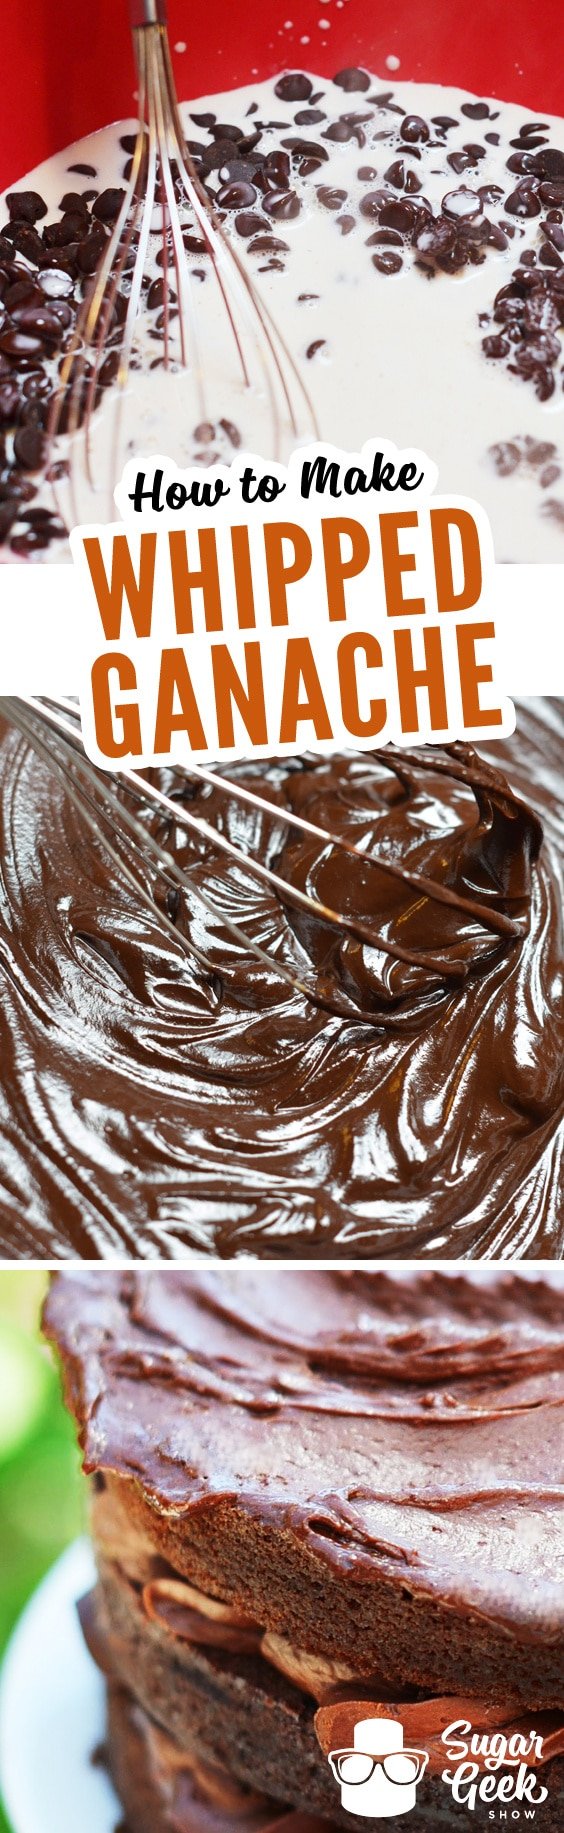 how to make whipped ganache recipe